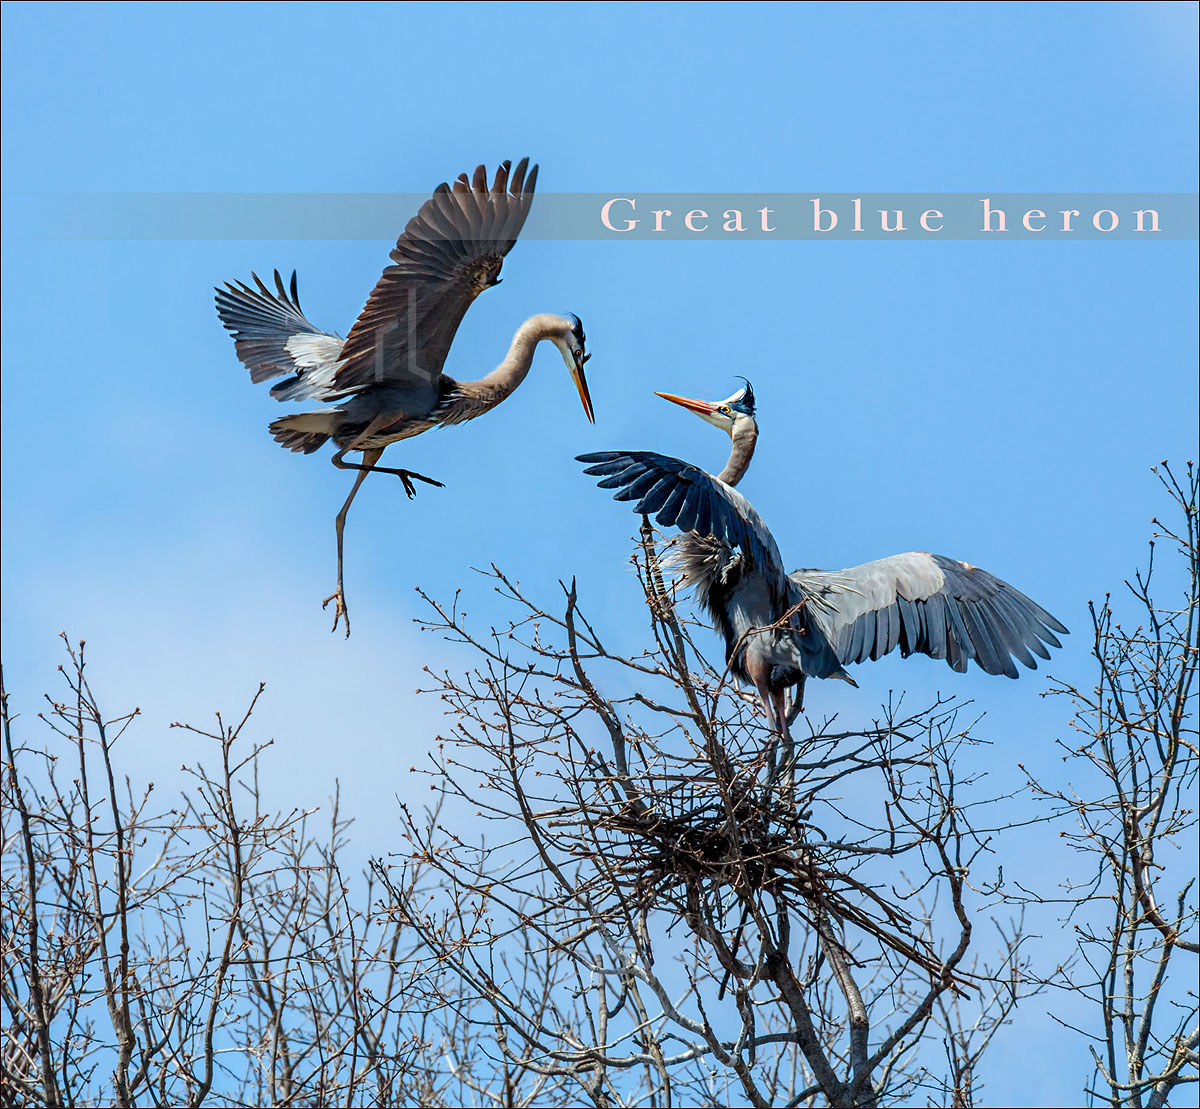 Blue heron nest.